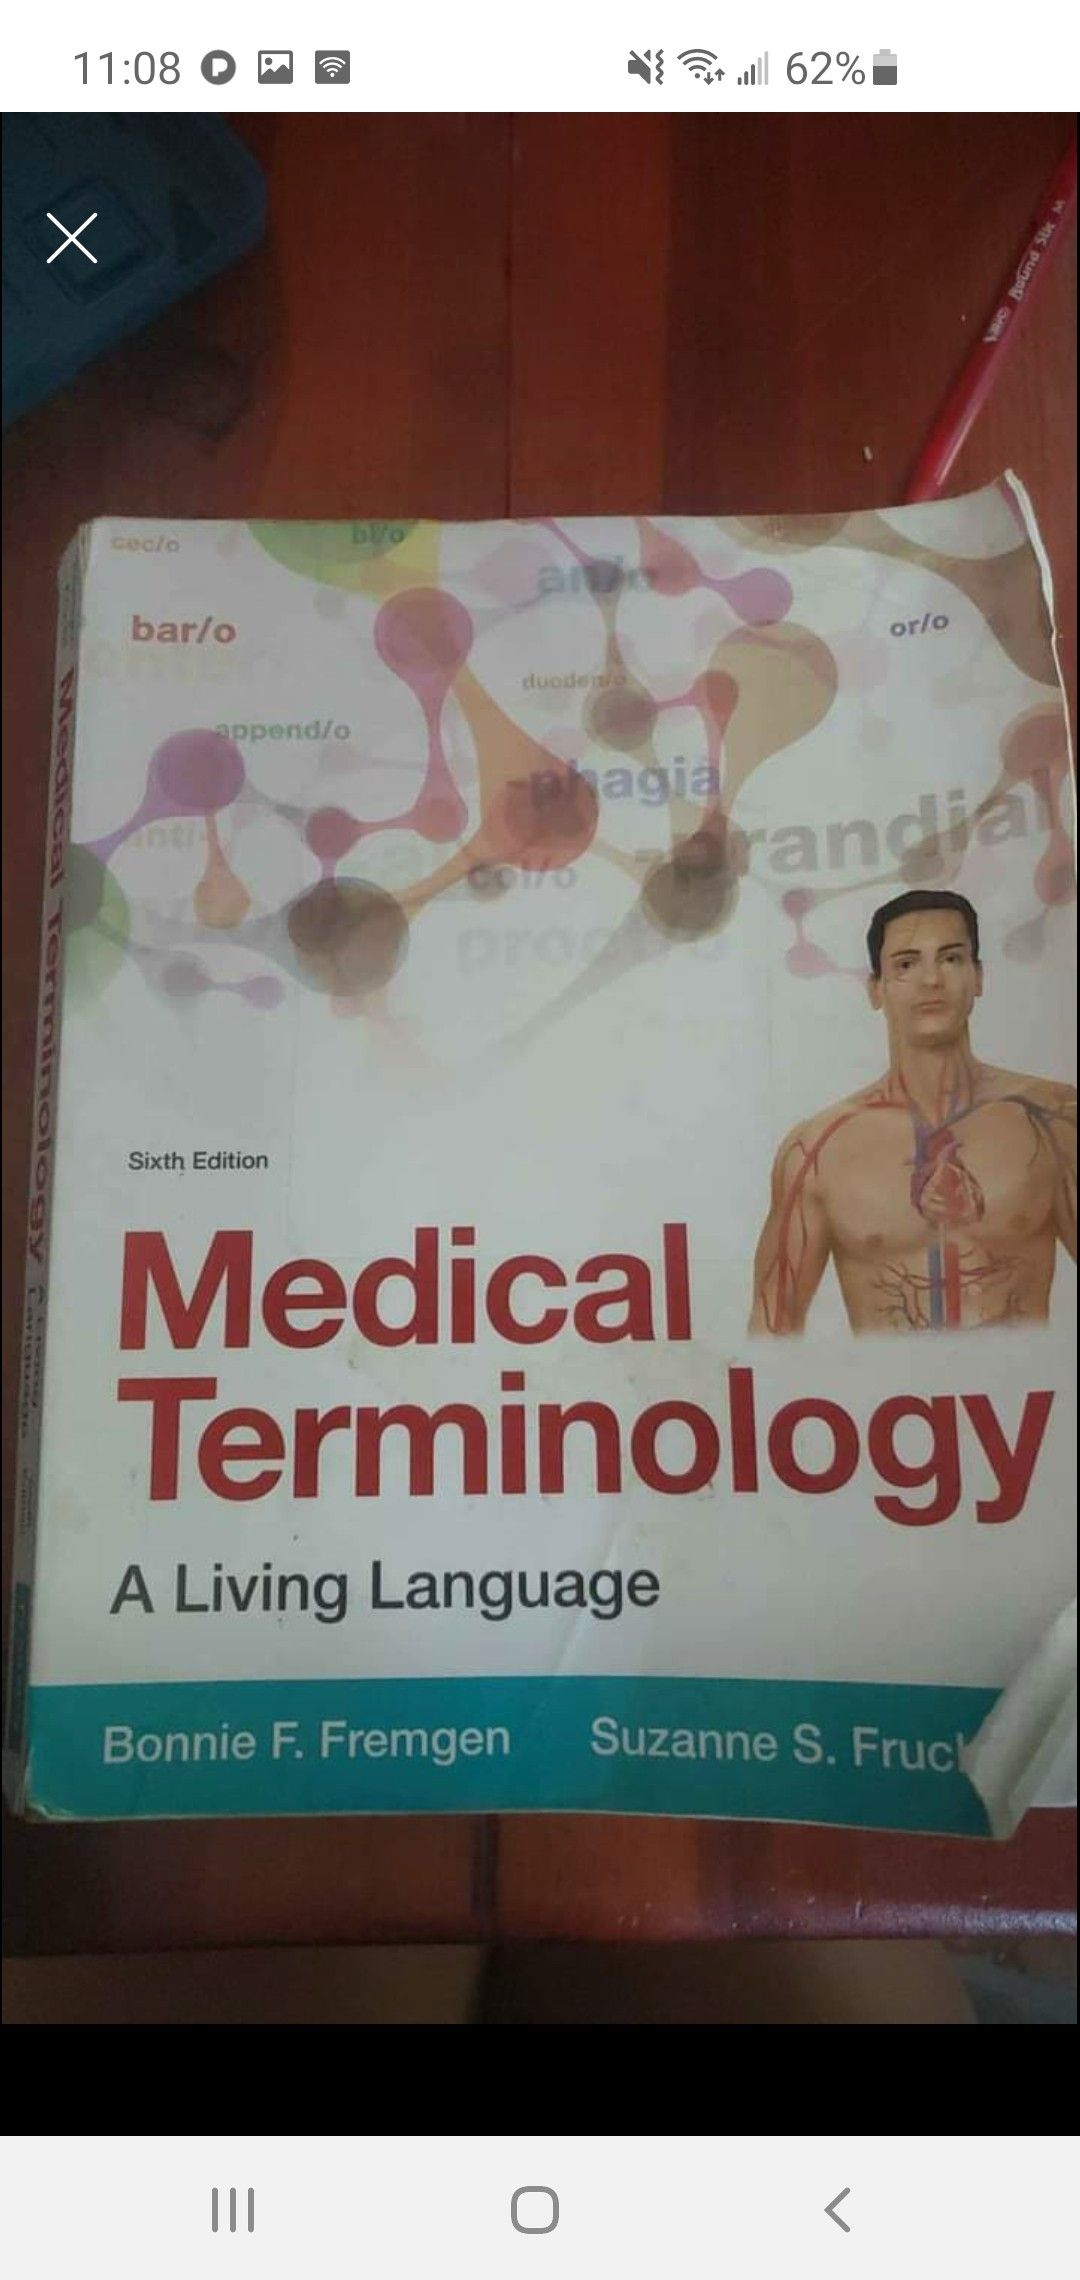 Medical Terminology book